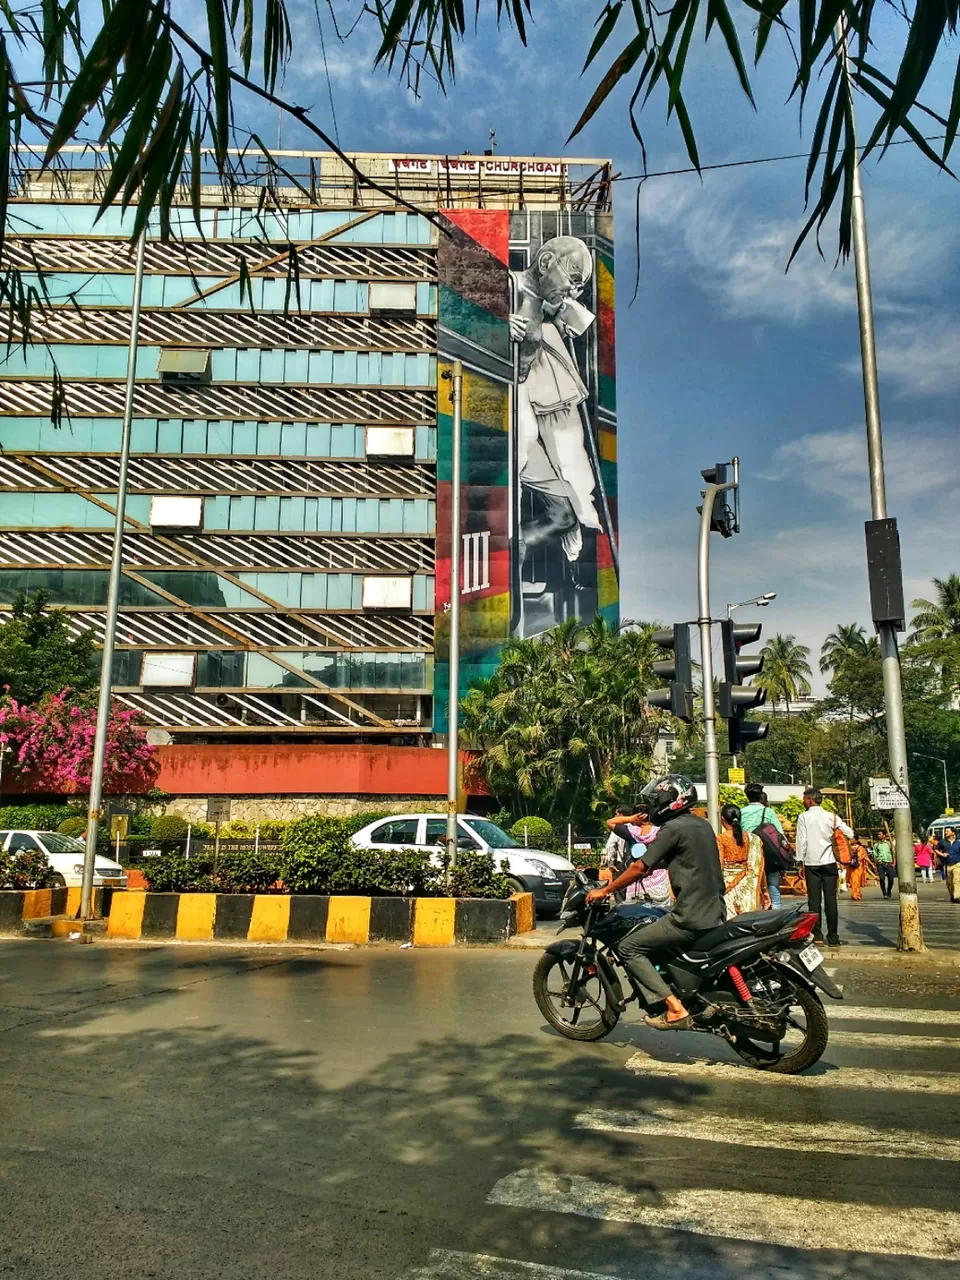 Photo of Mumbai, Maharashtra, India by Girish G.